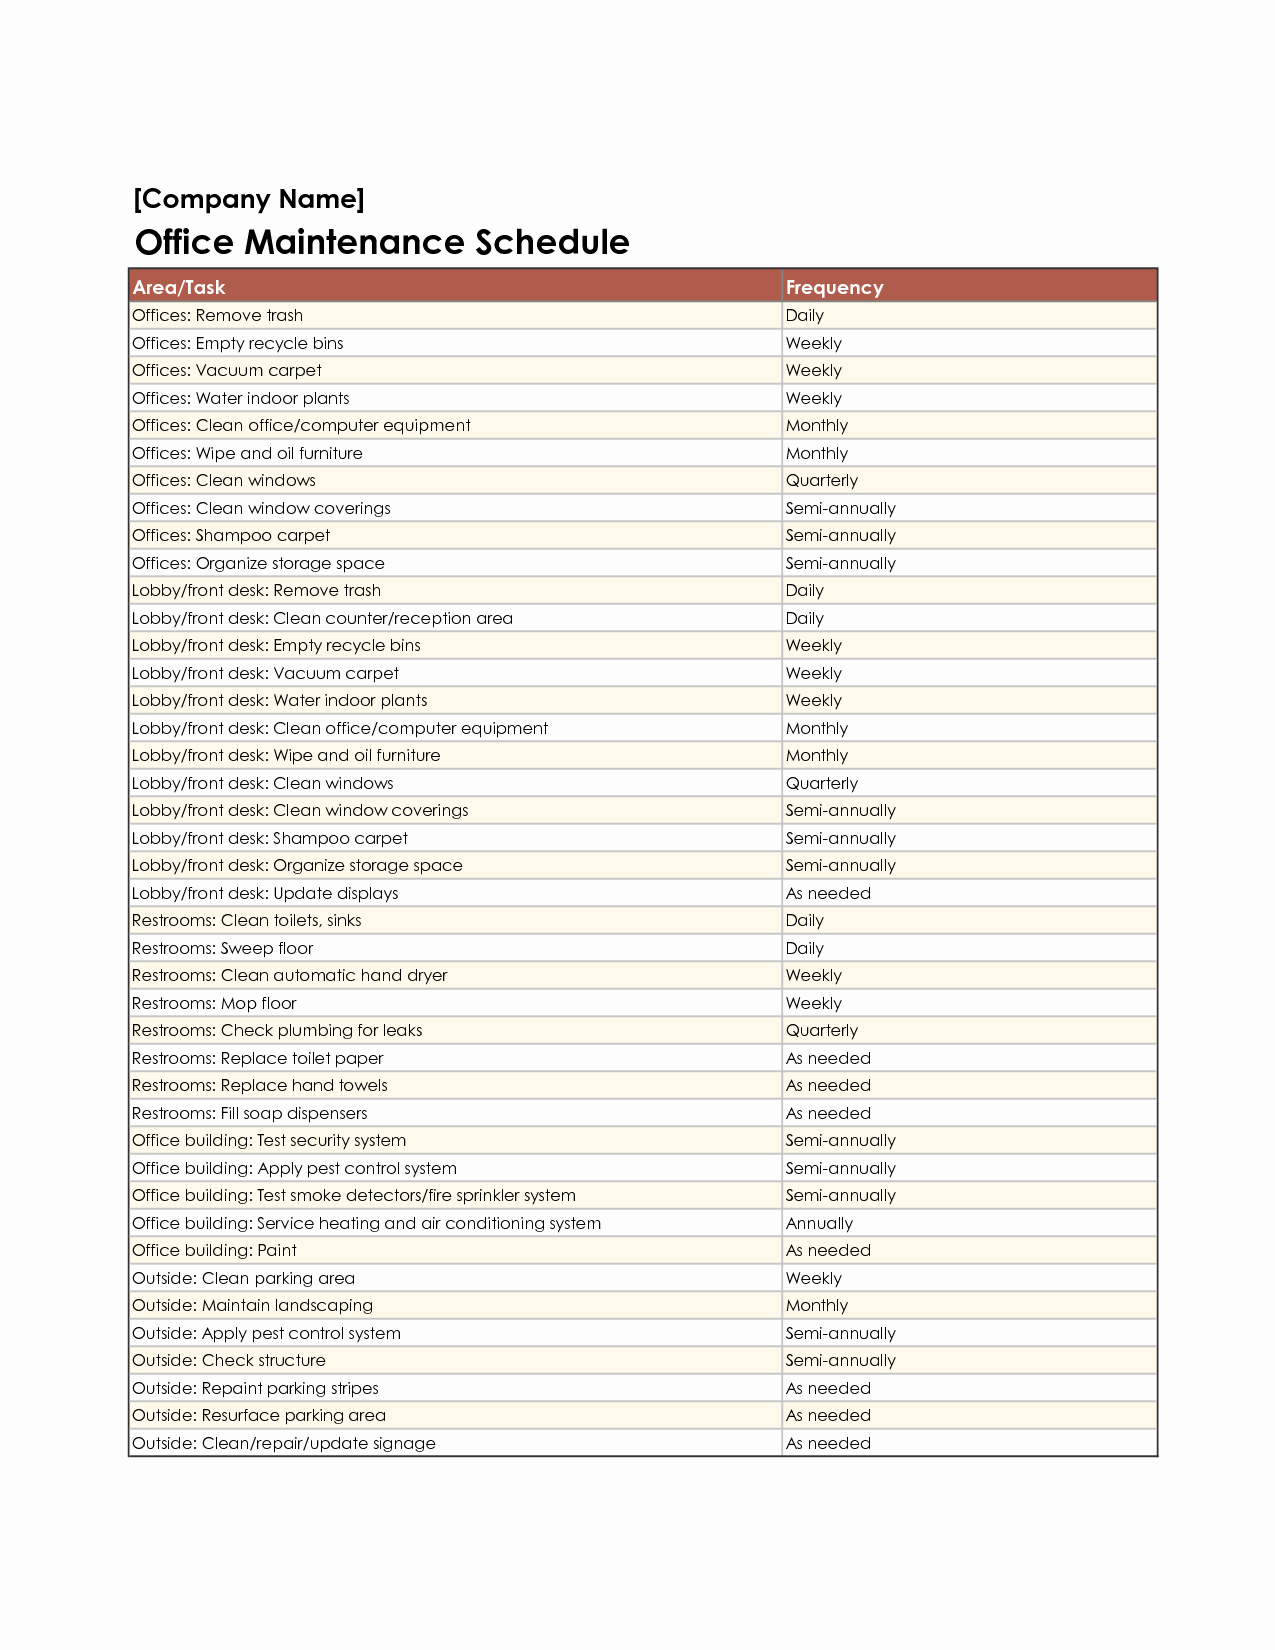 Equipment Maintenance Schedule Template Excel Luxury Equipment Maintenance Schedule Template Excel